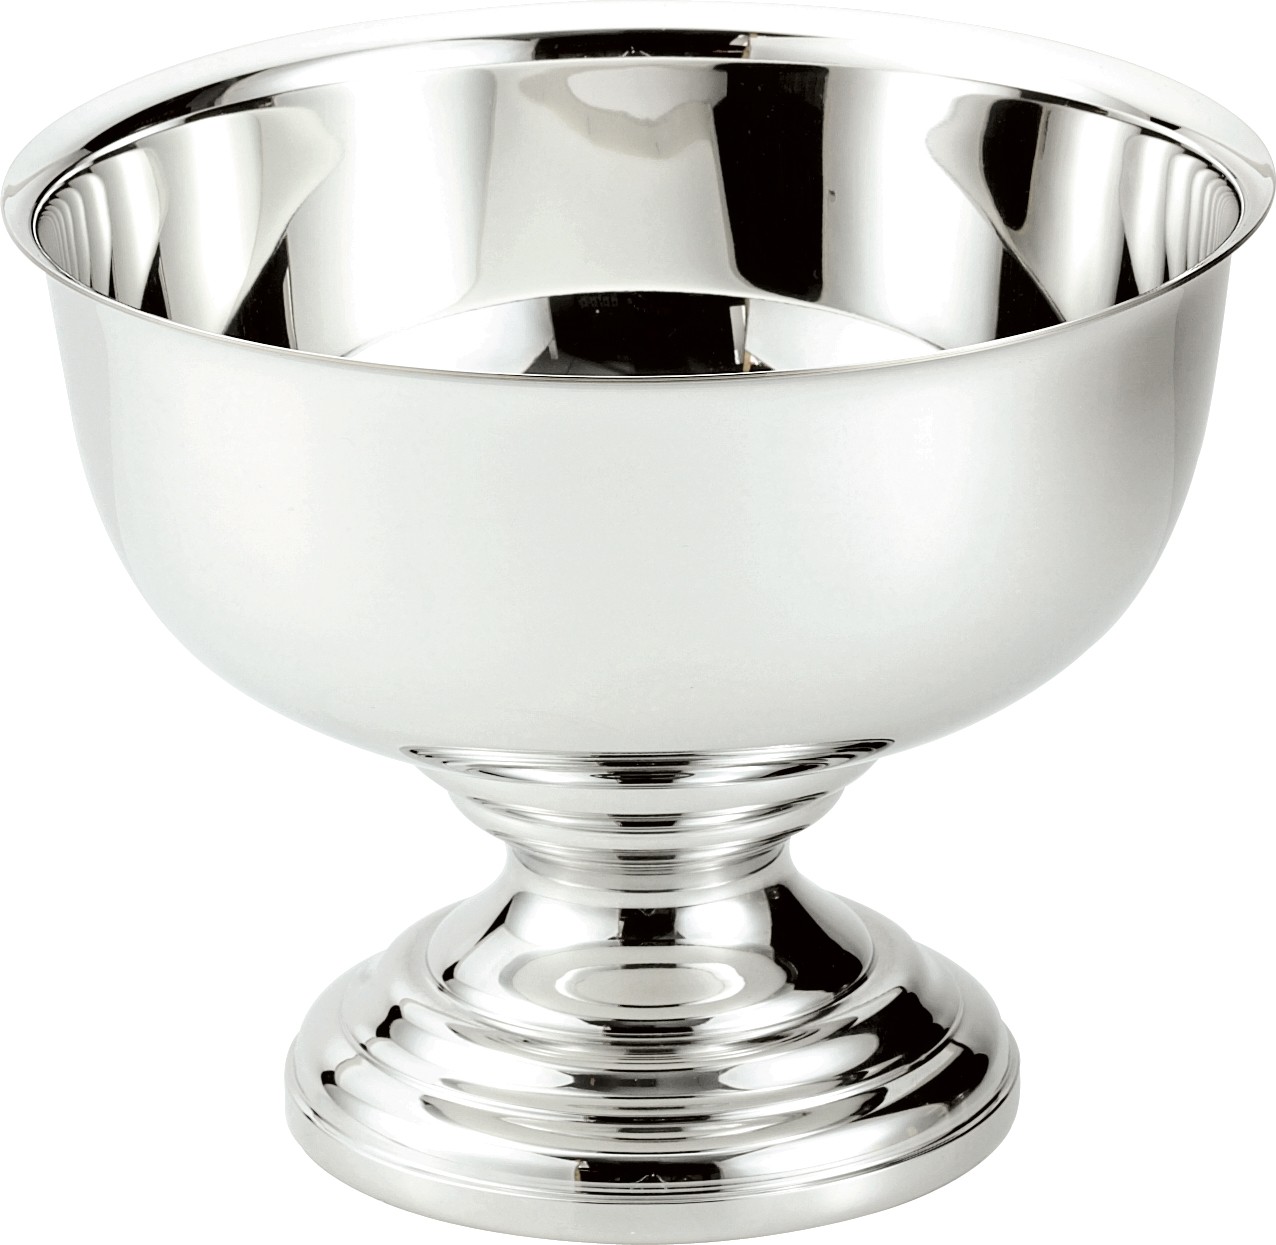 Pewter trophy bowl - 5 1/2 " ht. x 6" dia